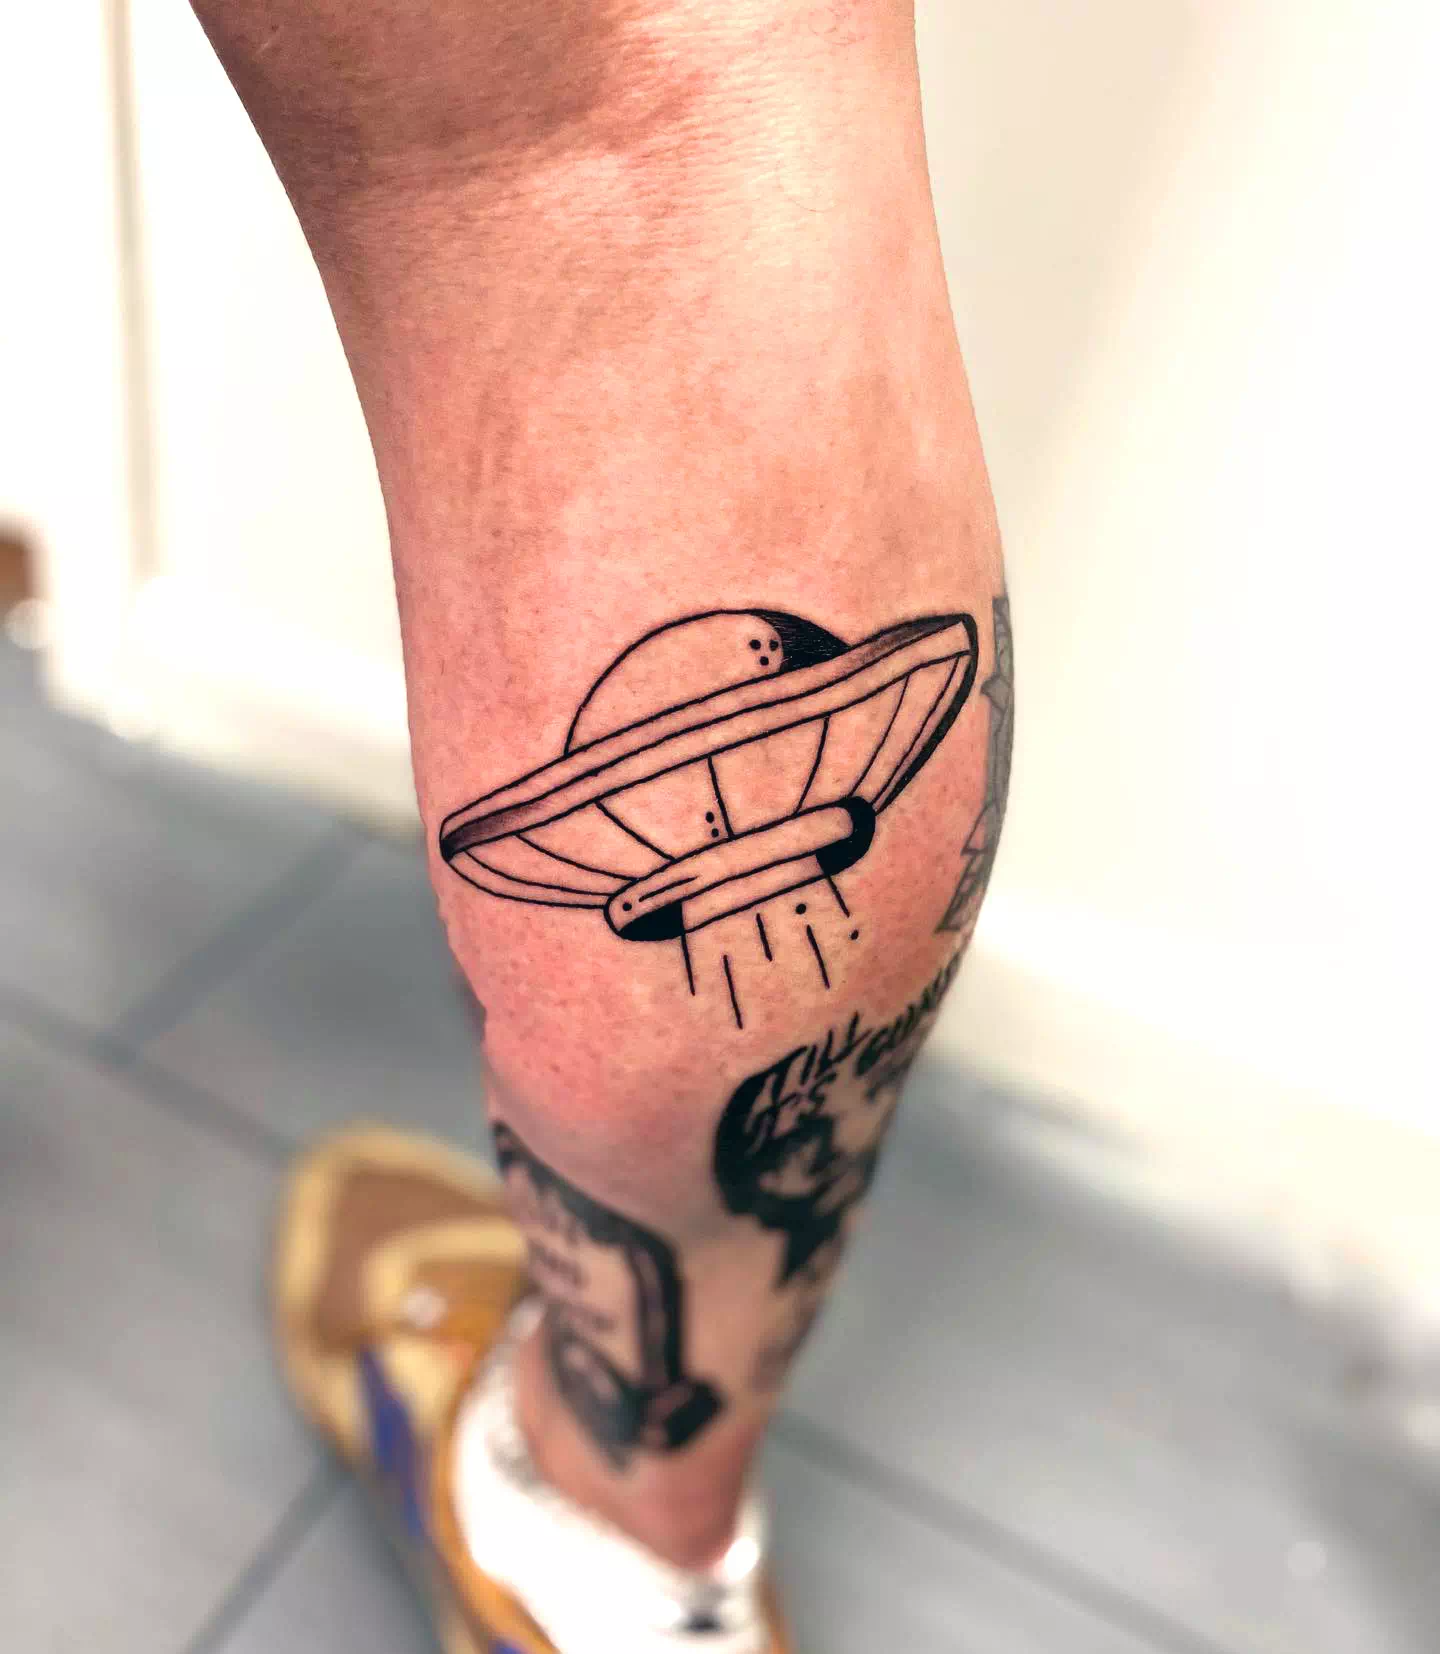 Tatuaje simple de una nave espacial 2